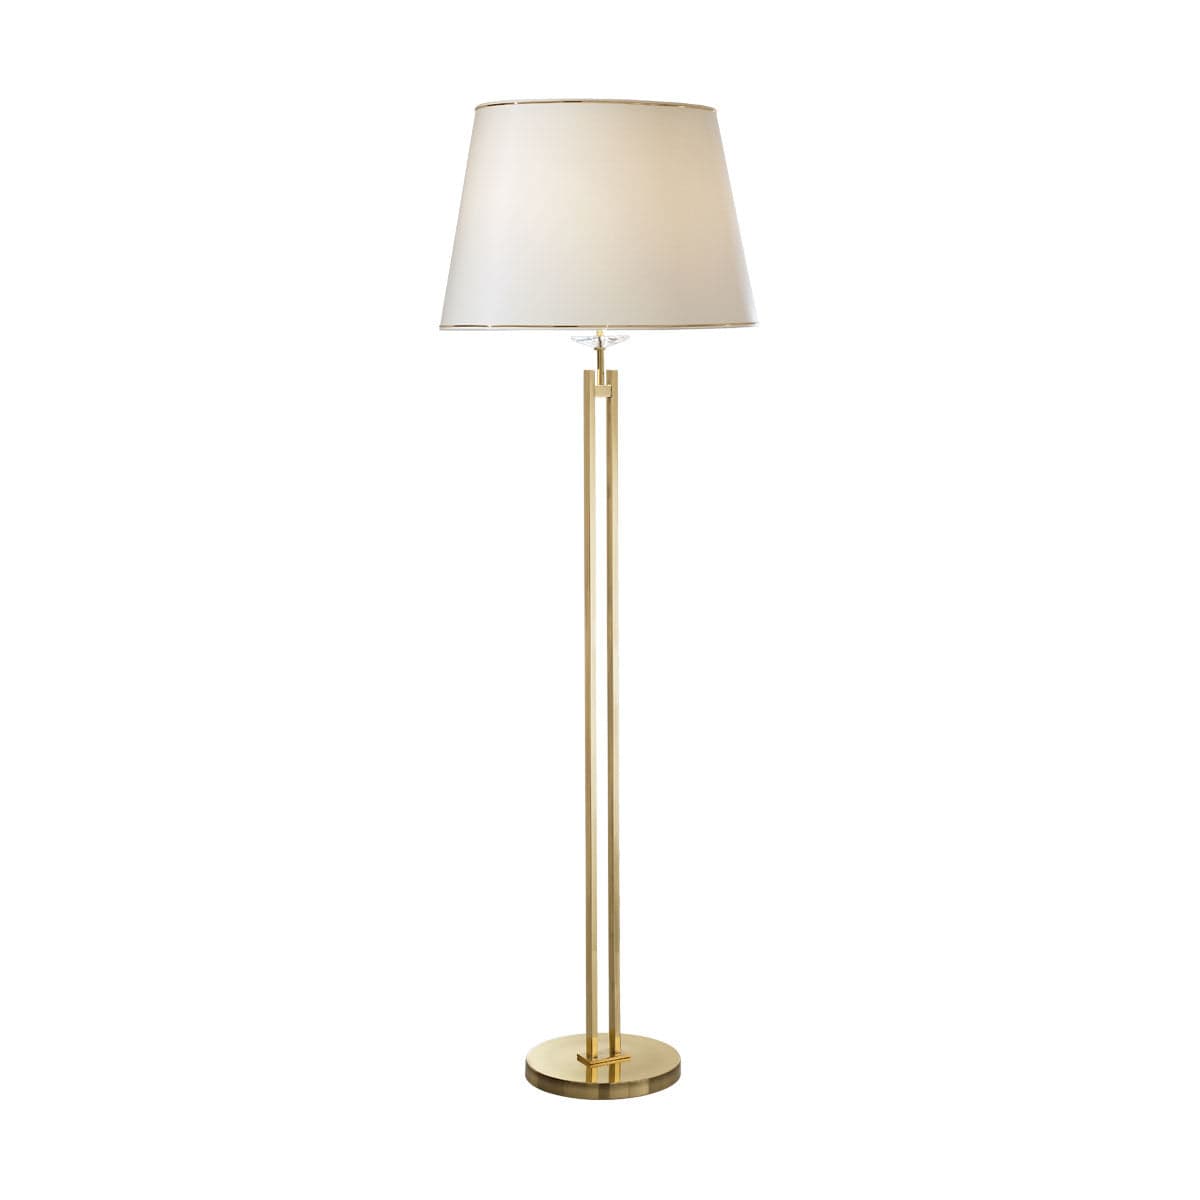 Kolarz Floor Lamp Imperial Floor Lamp, English Brass, 2 lights